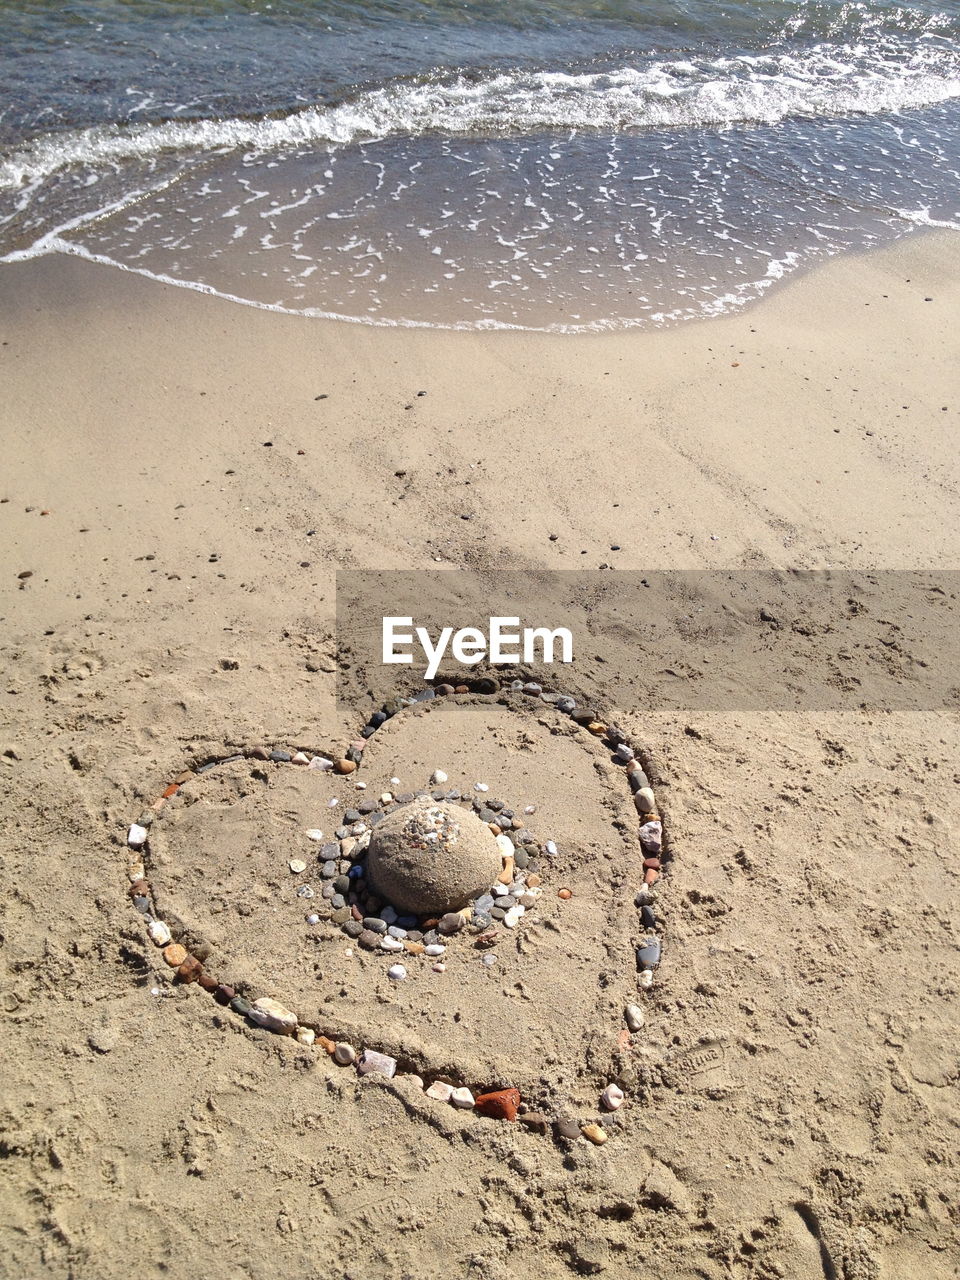 Heart shape drawing on sandy beach